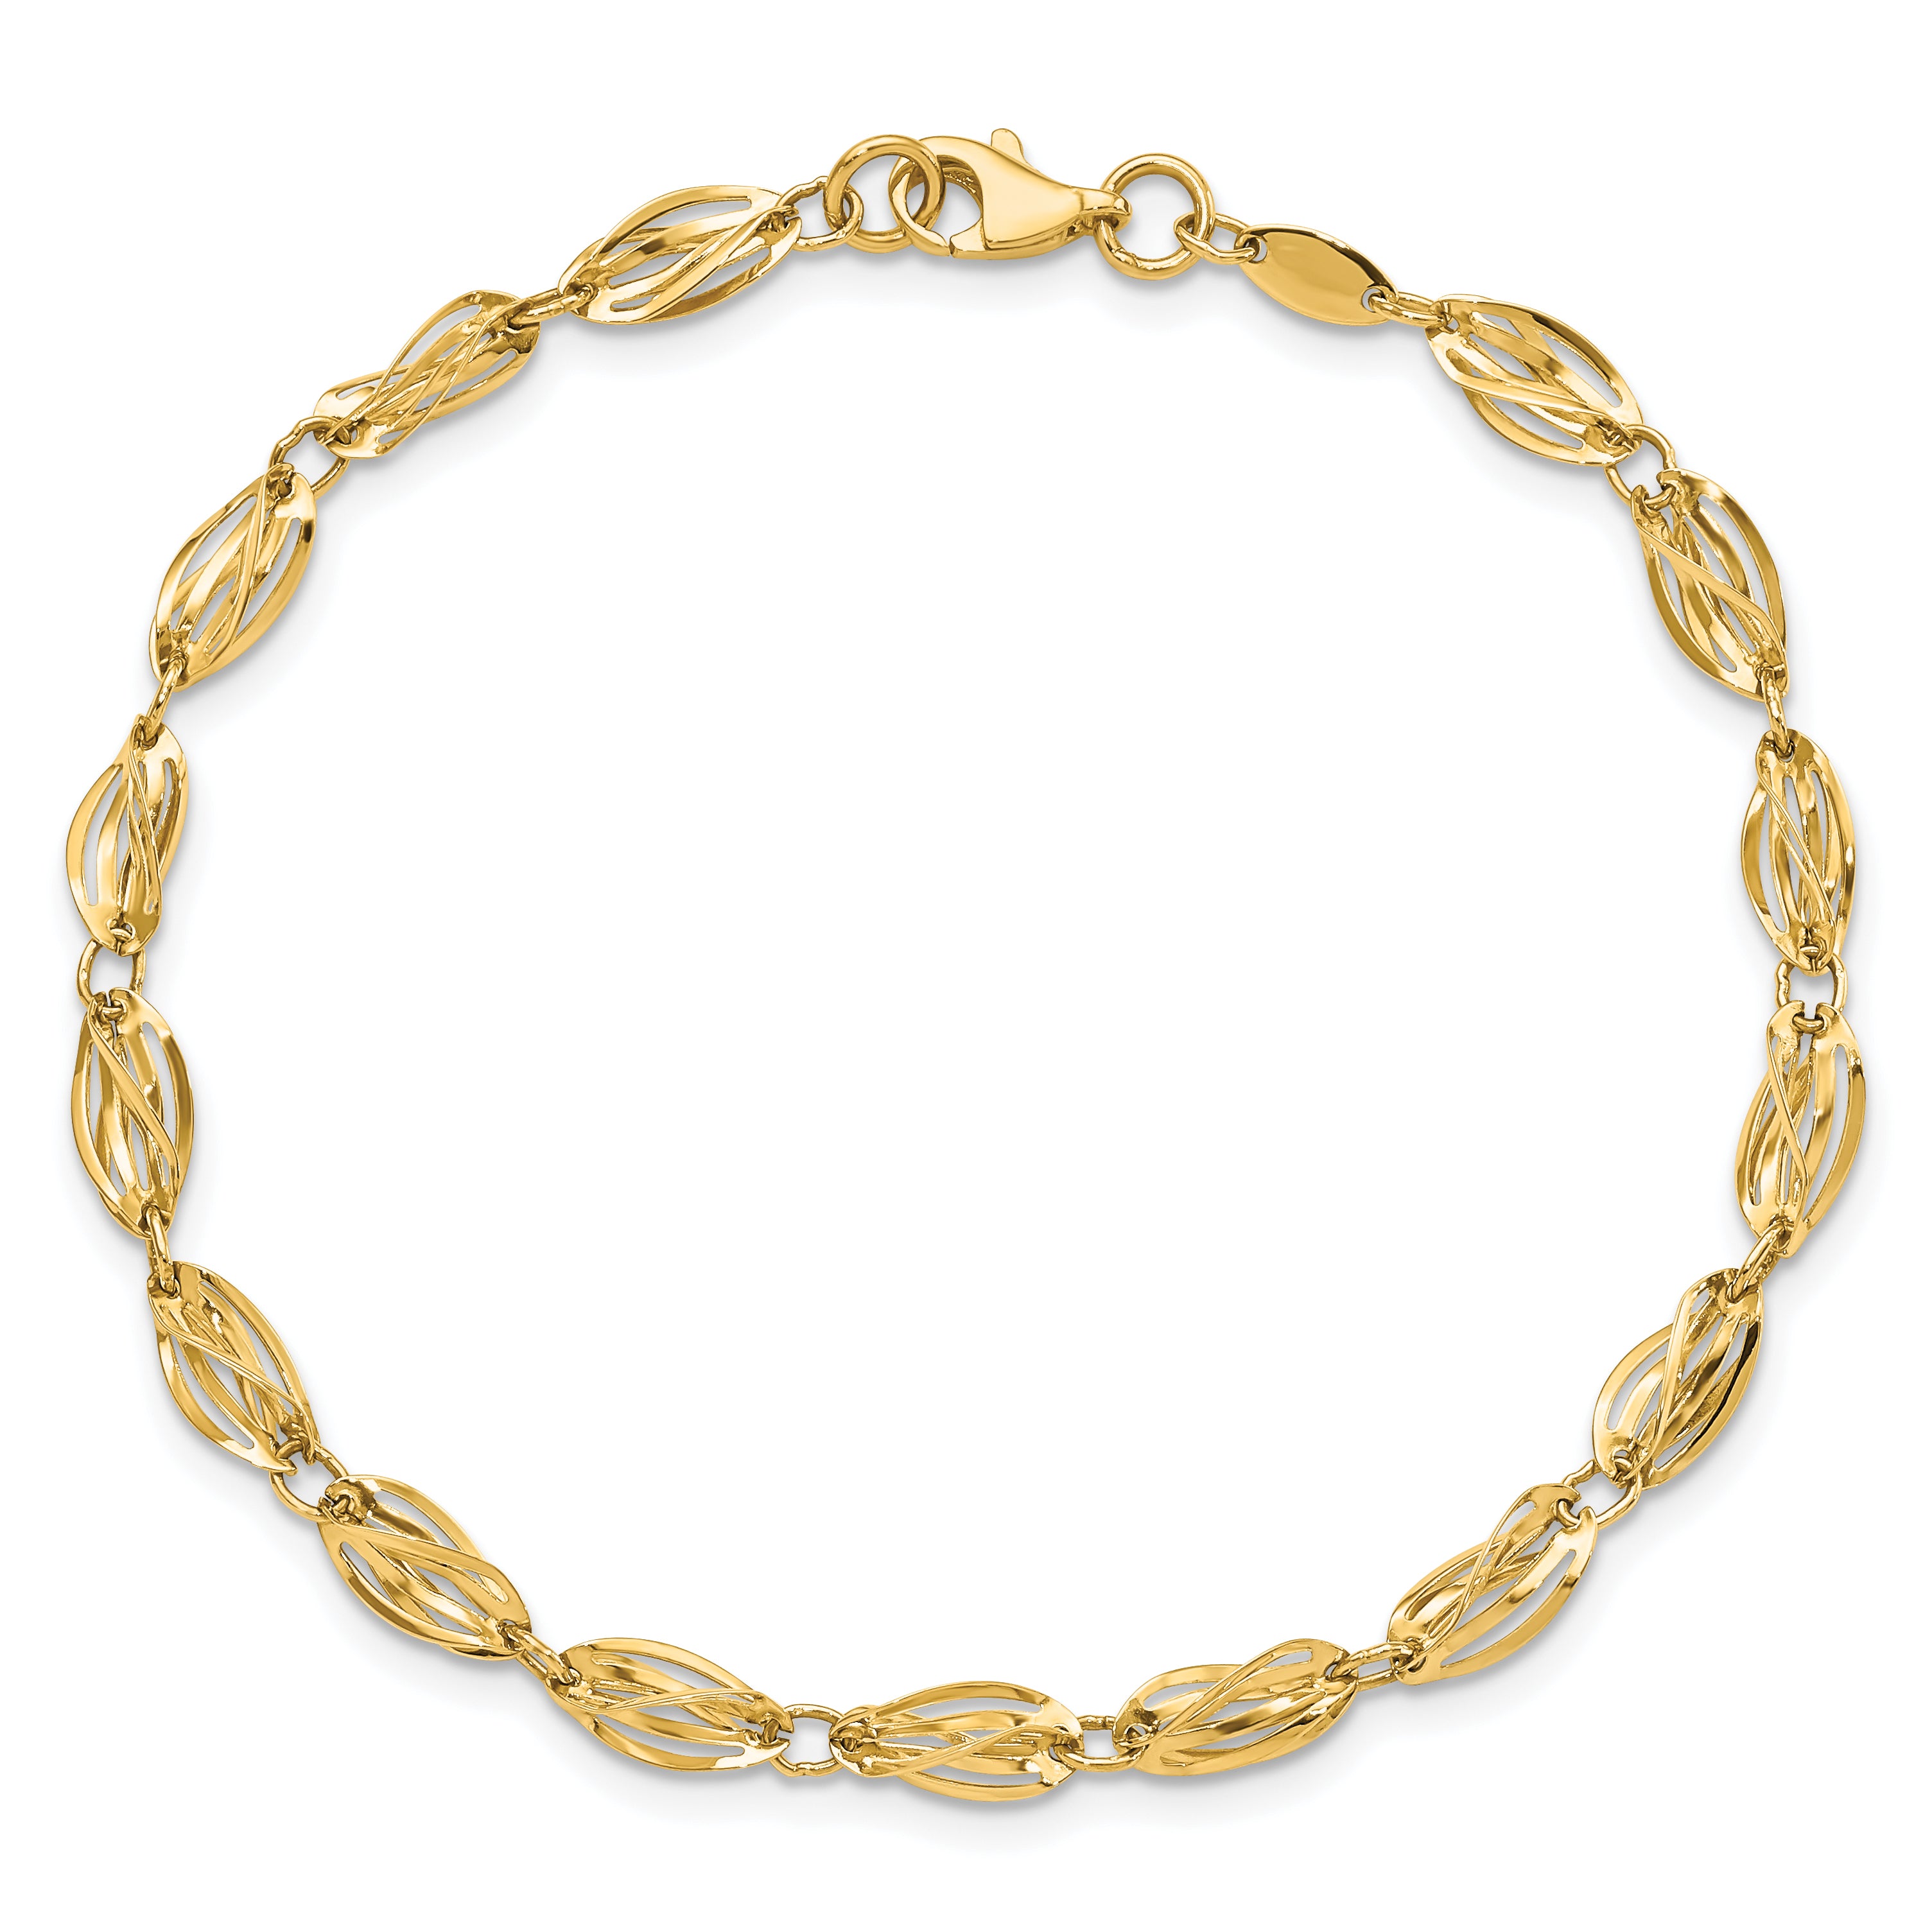 14K Gold Polished Fancy Bracelet